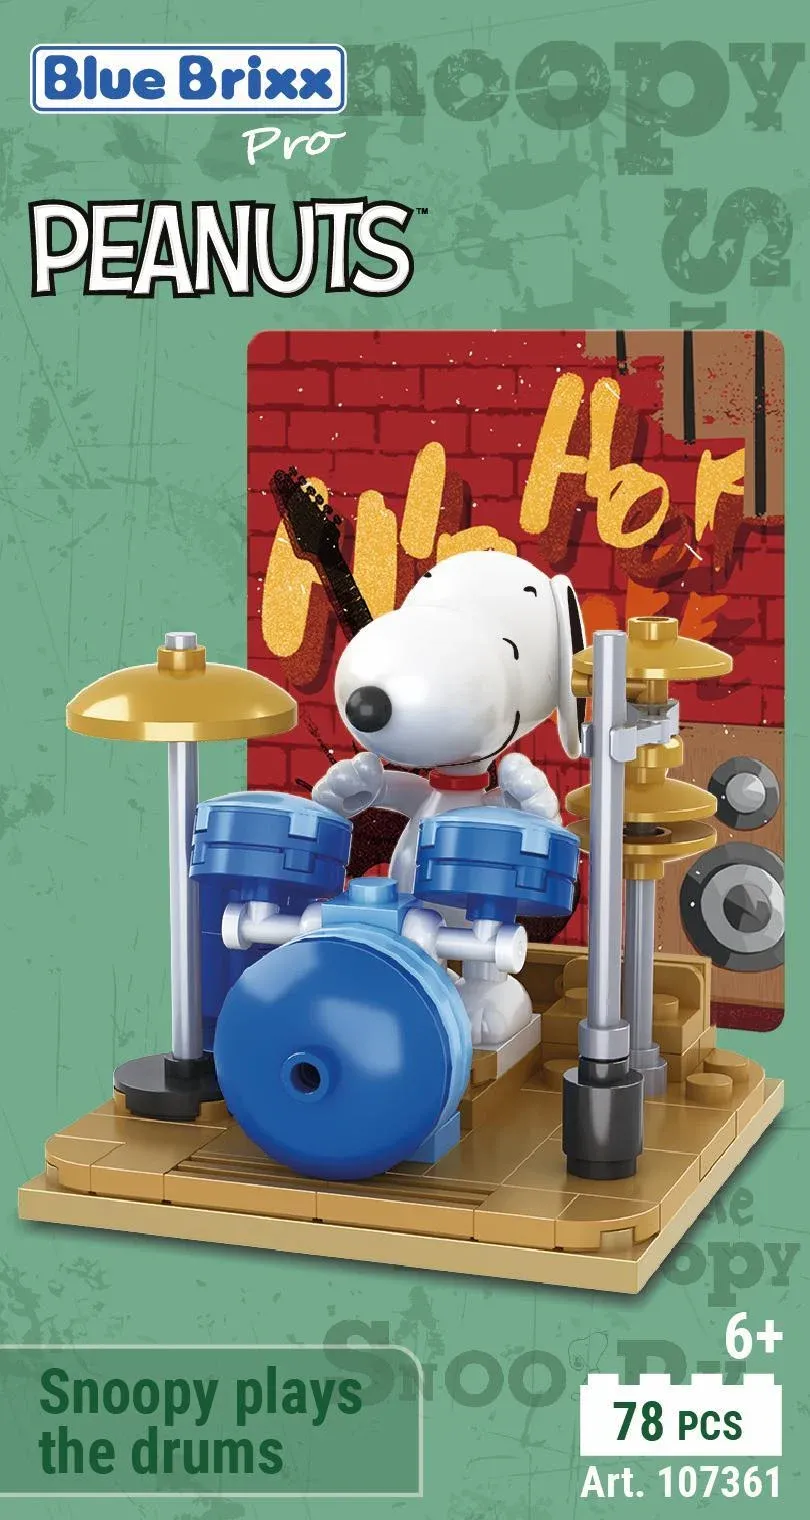 BlueBrixx Peanuts Snoopy plays the drums • Set 107361